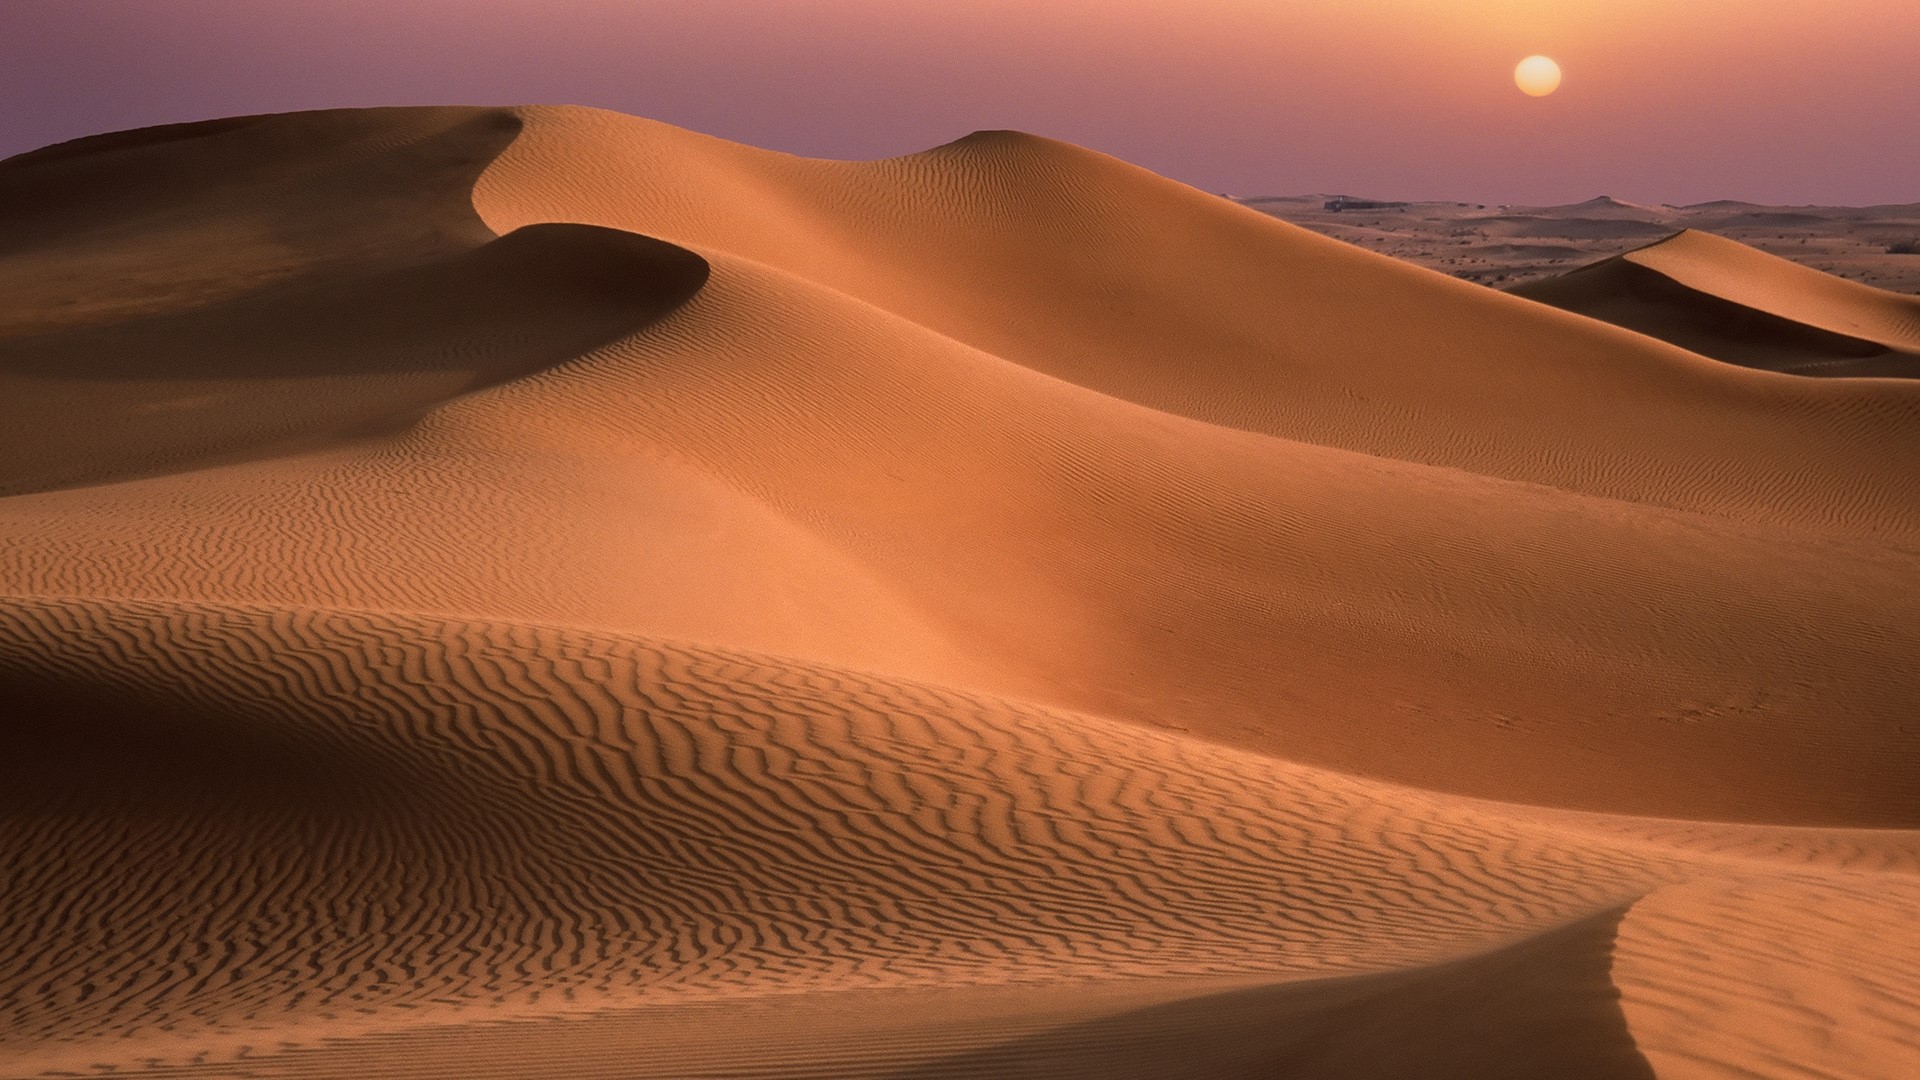 Sunset Over The Vivid Sand Dunes In The Deserts Of Dubai Uae Windows Spotlight Images